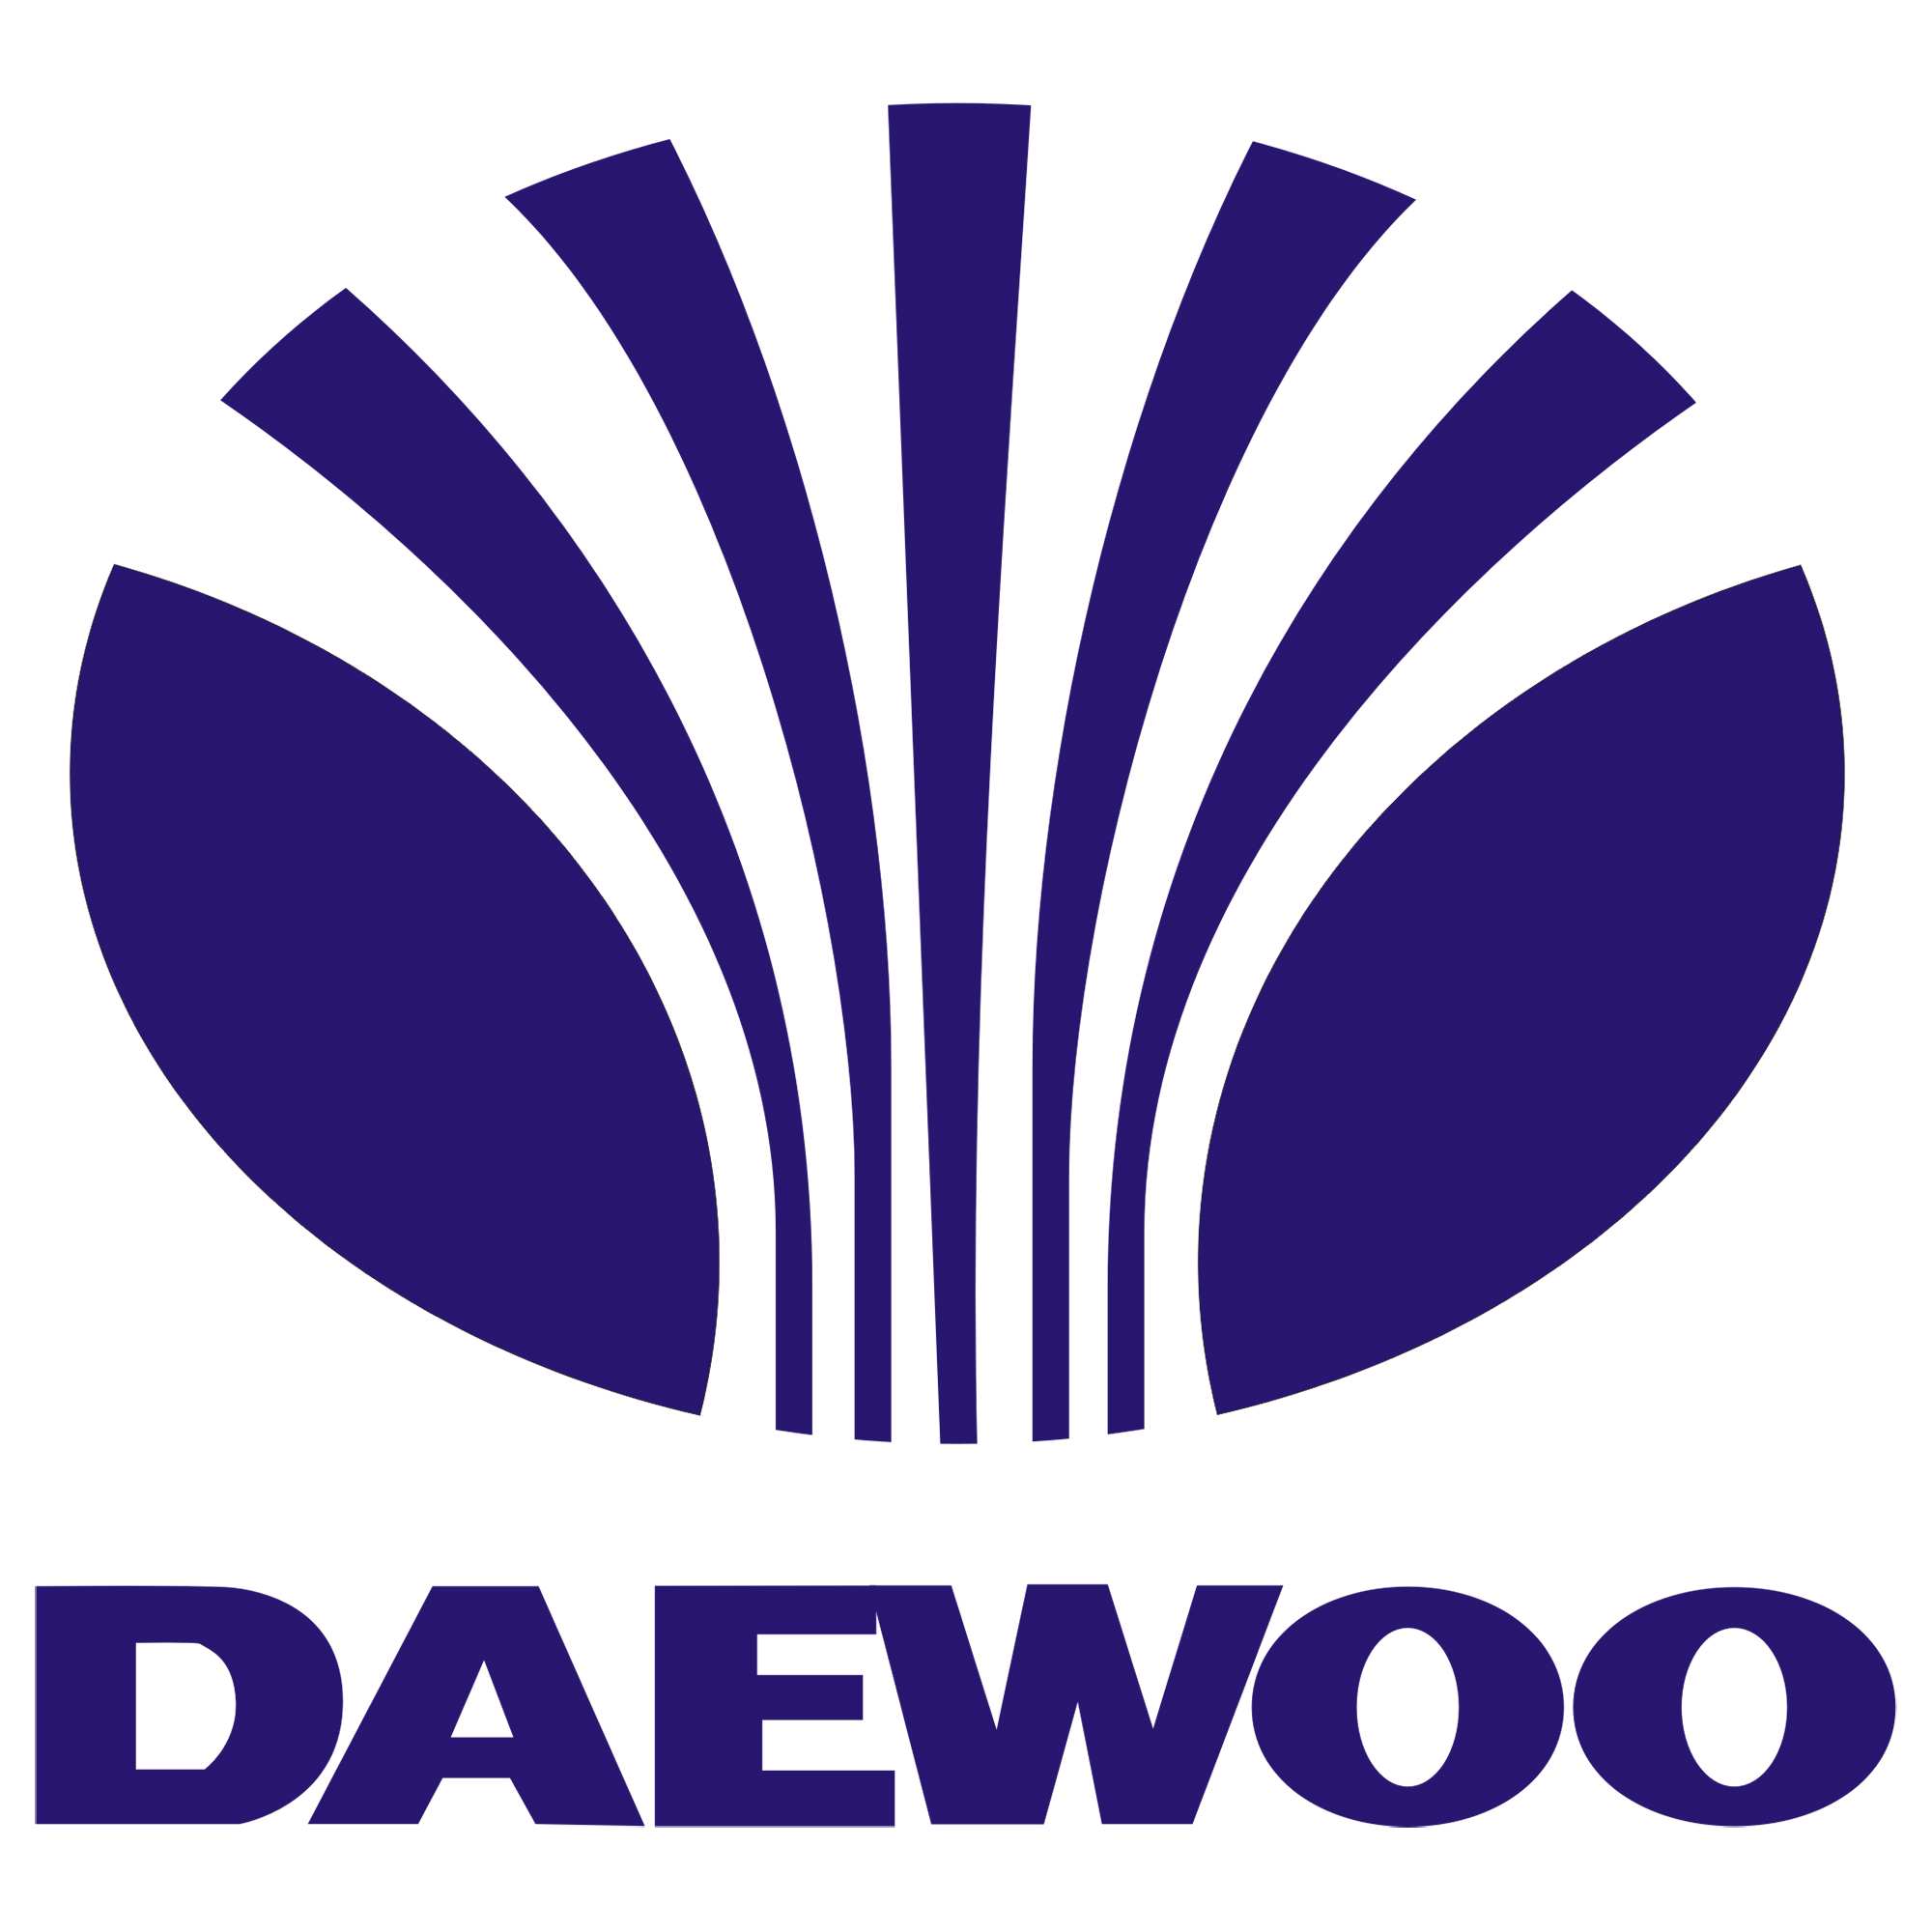 Daewoo 30111-0050101-00 Refrigerator Ice Maker (replaces 30111-0050101) Genuine Original Equipment Manufacturer (OEM) Part